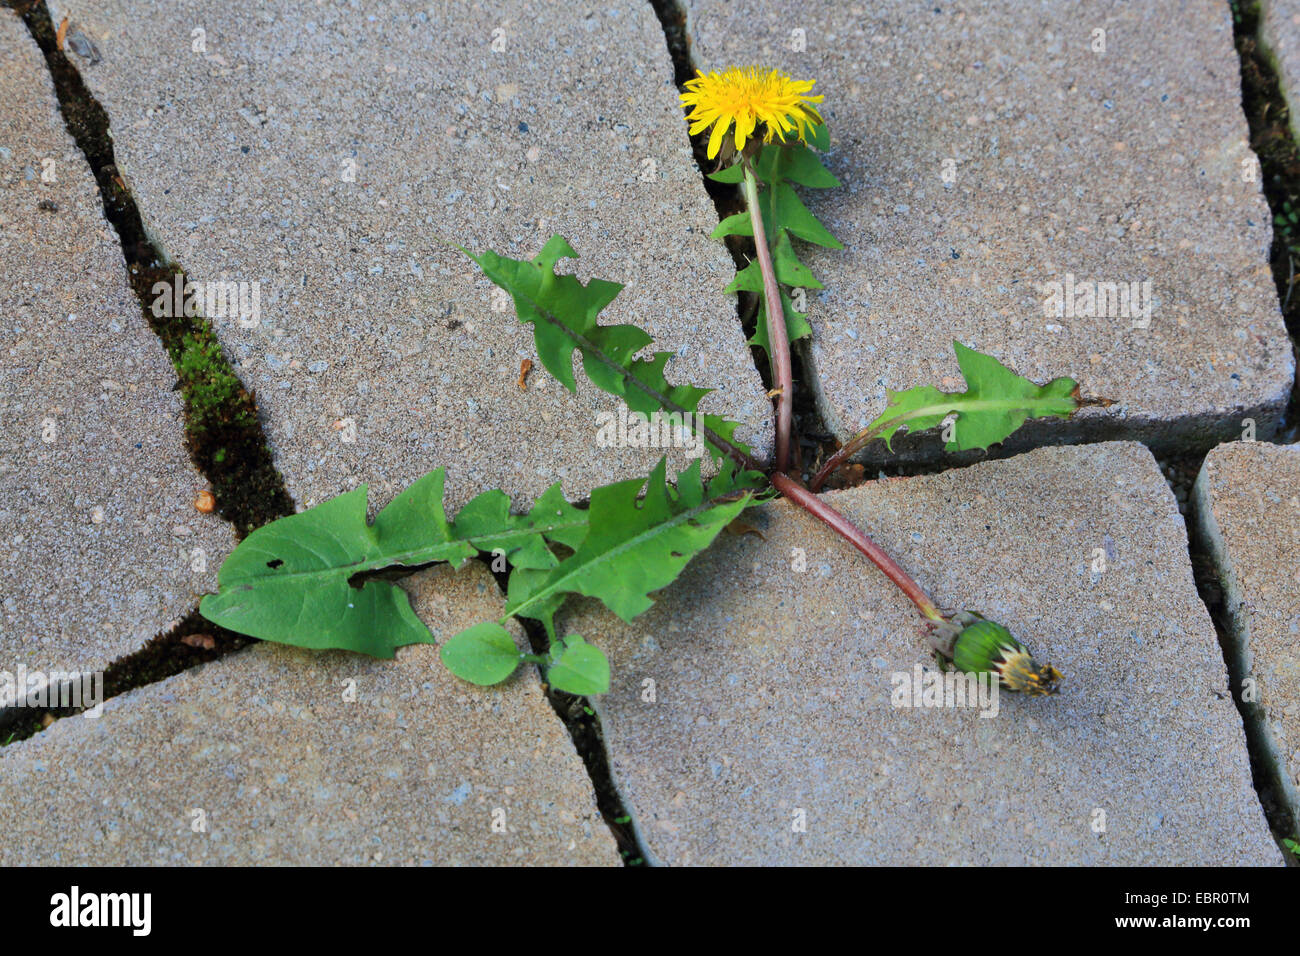 common dandelion (Taraxacum officinale), between paving stones, Germany Stock Photo